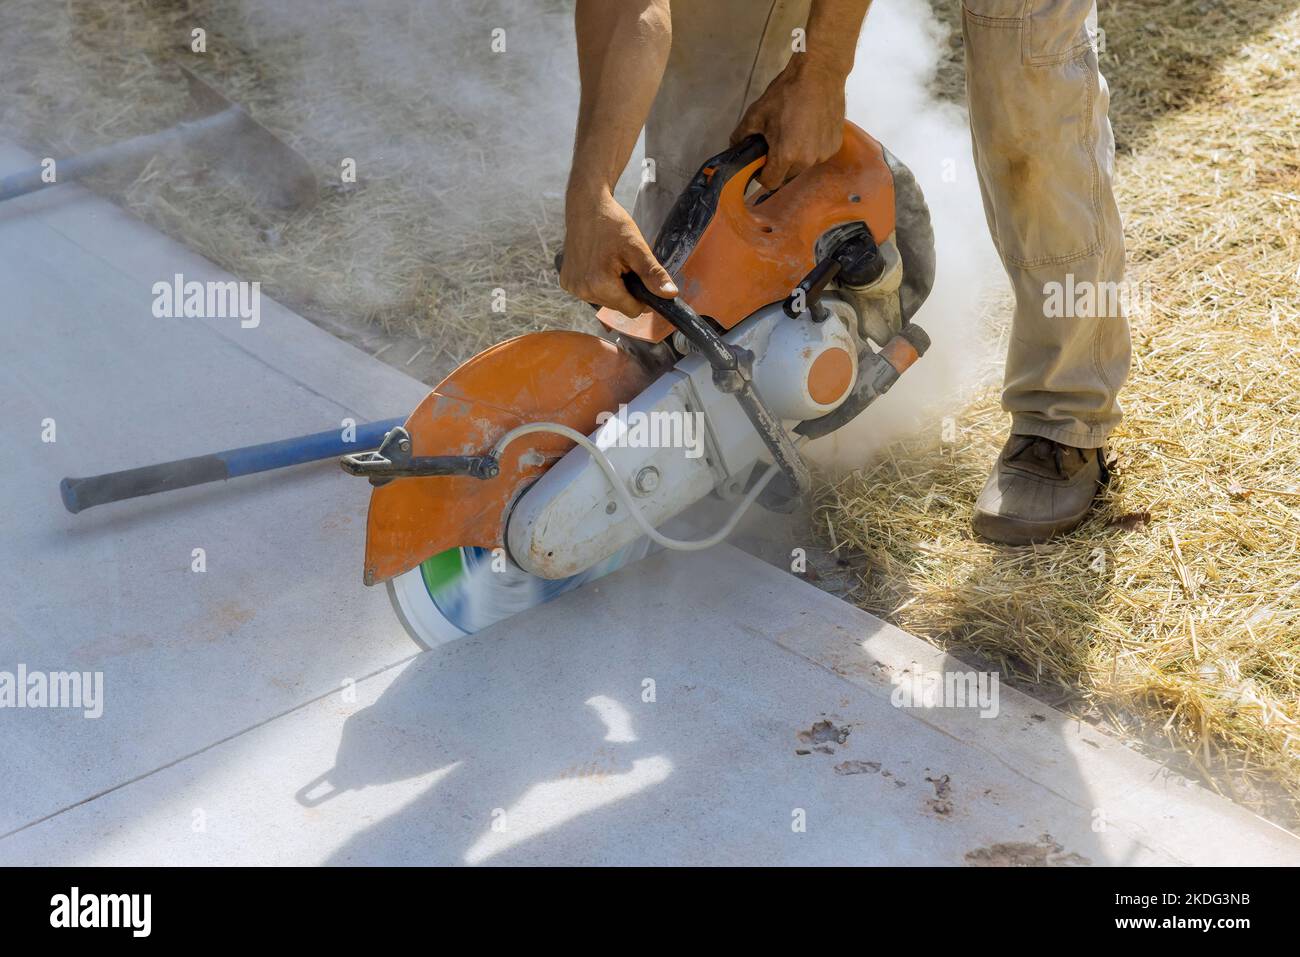 Construction worker cutting concrete sidewalk using diamond blade saw machine Stock Photo